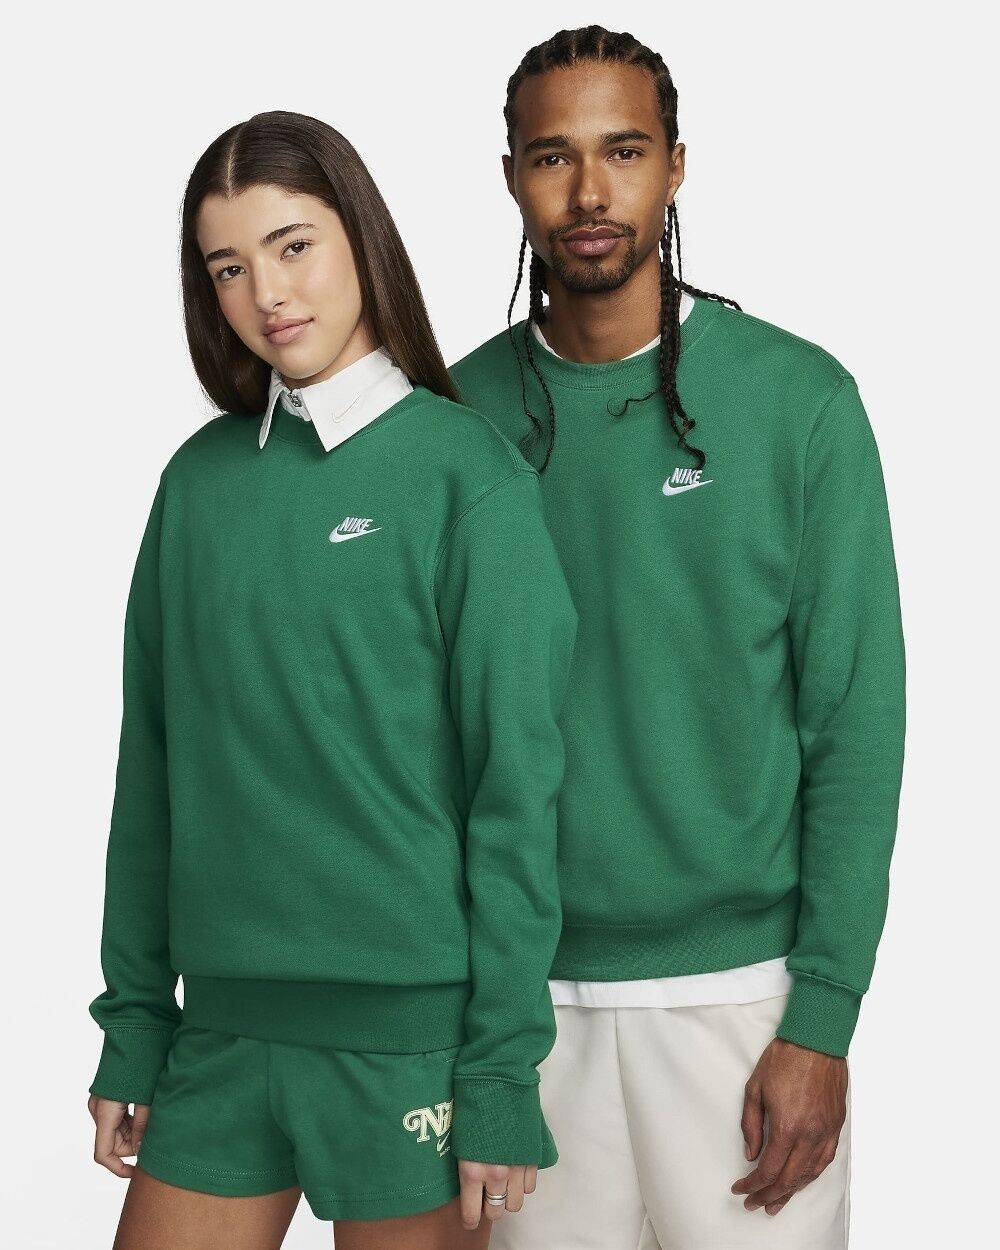 Nike Felpa Sportiva girocollo UOMO Verde Pullover Crew Club Fleece Lifestyle